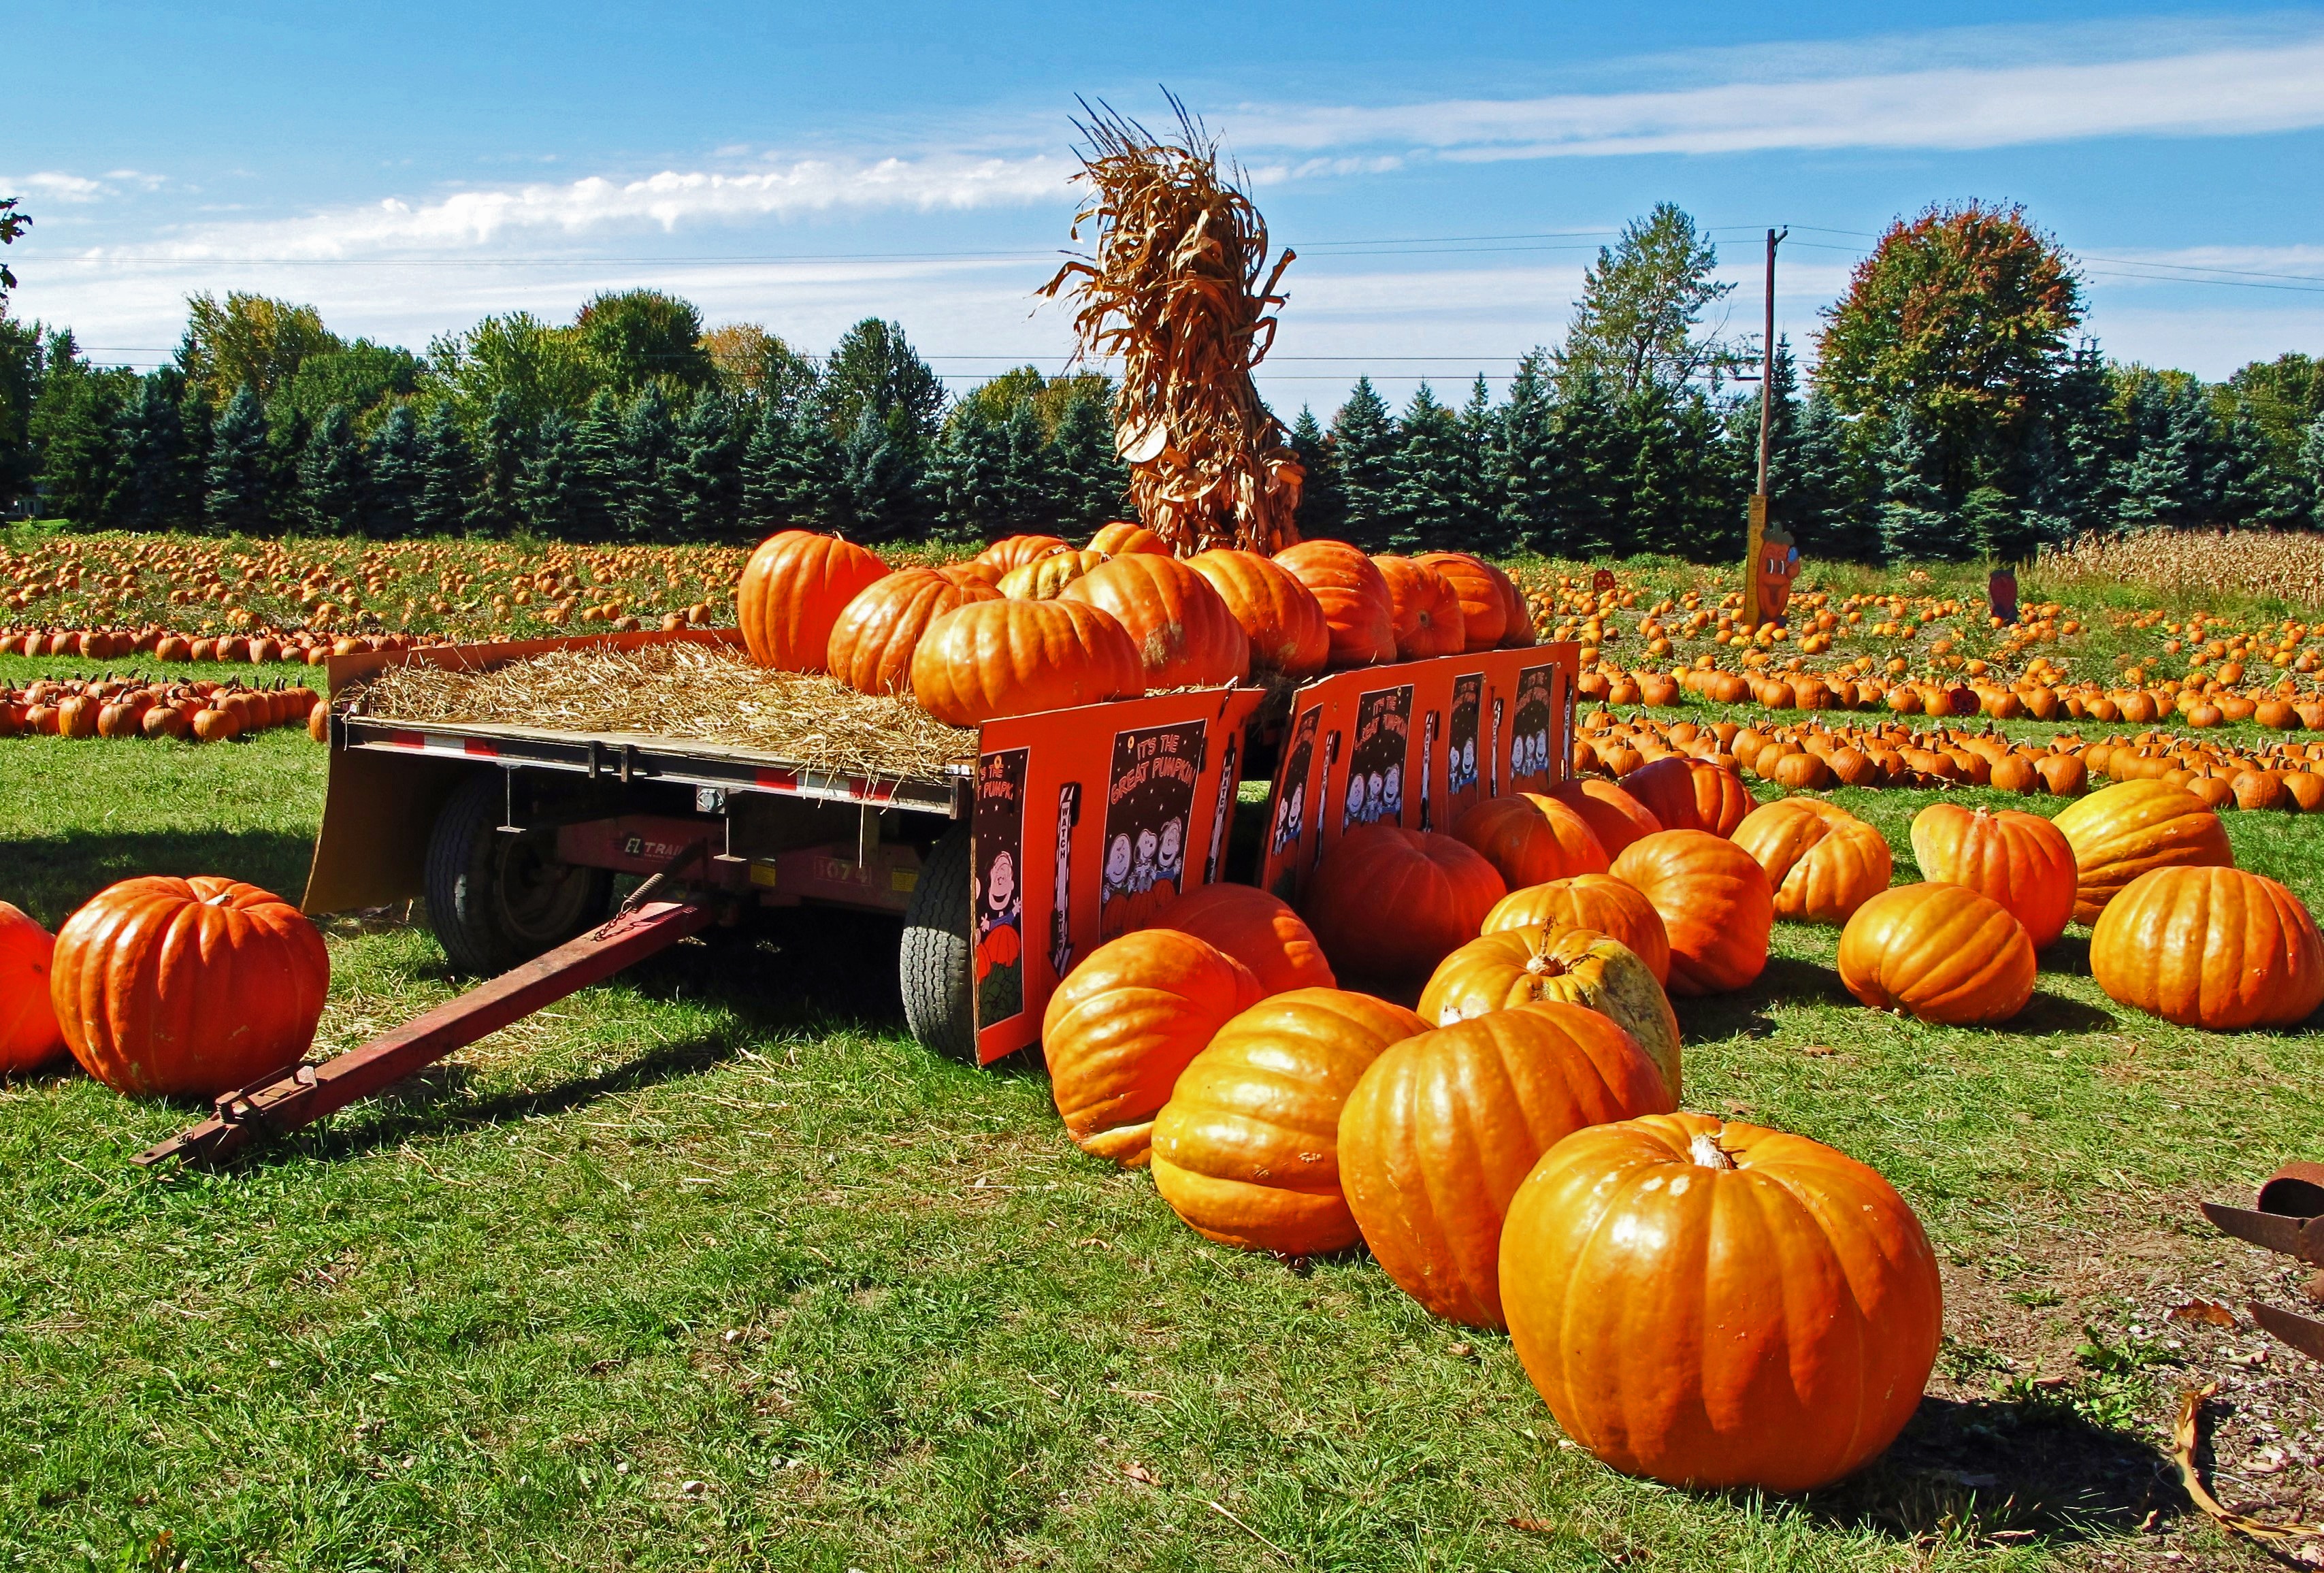 Pumpkins on pumpkins! Nostalgia abounds in the autumn.